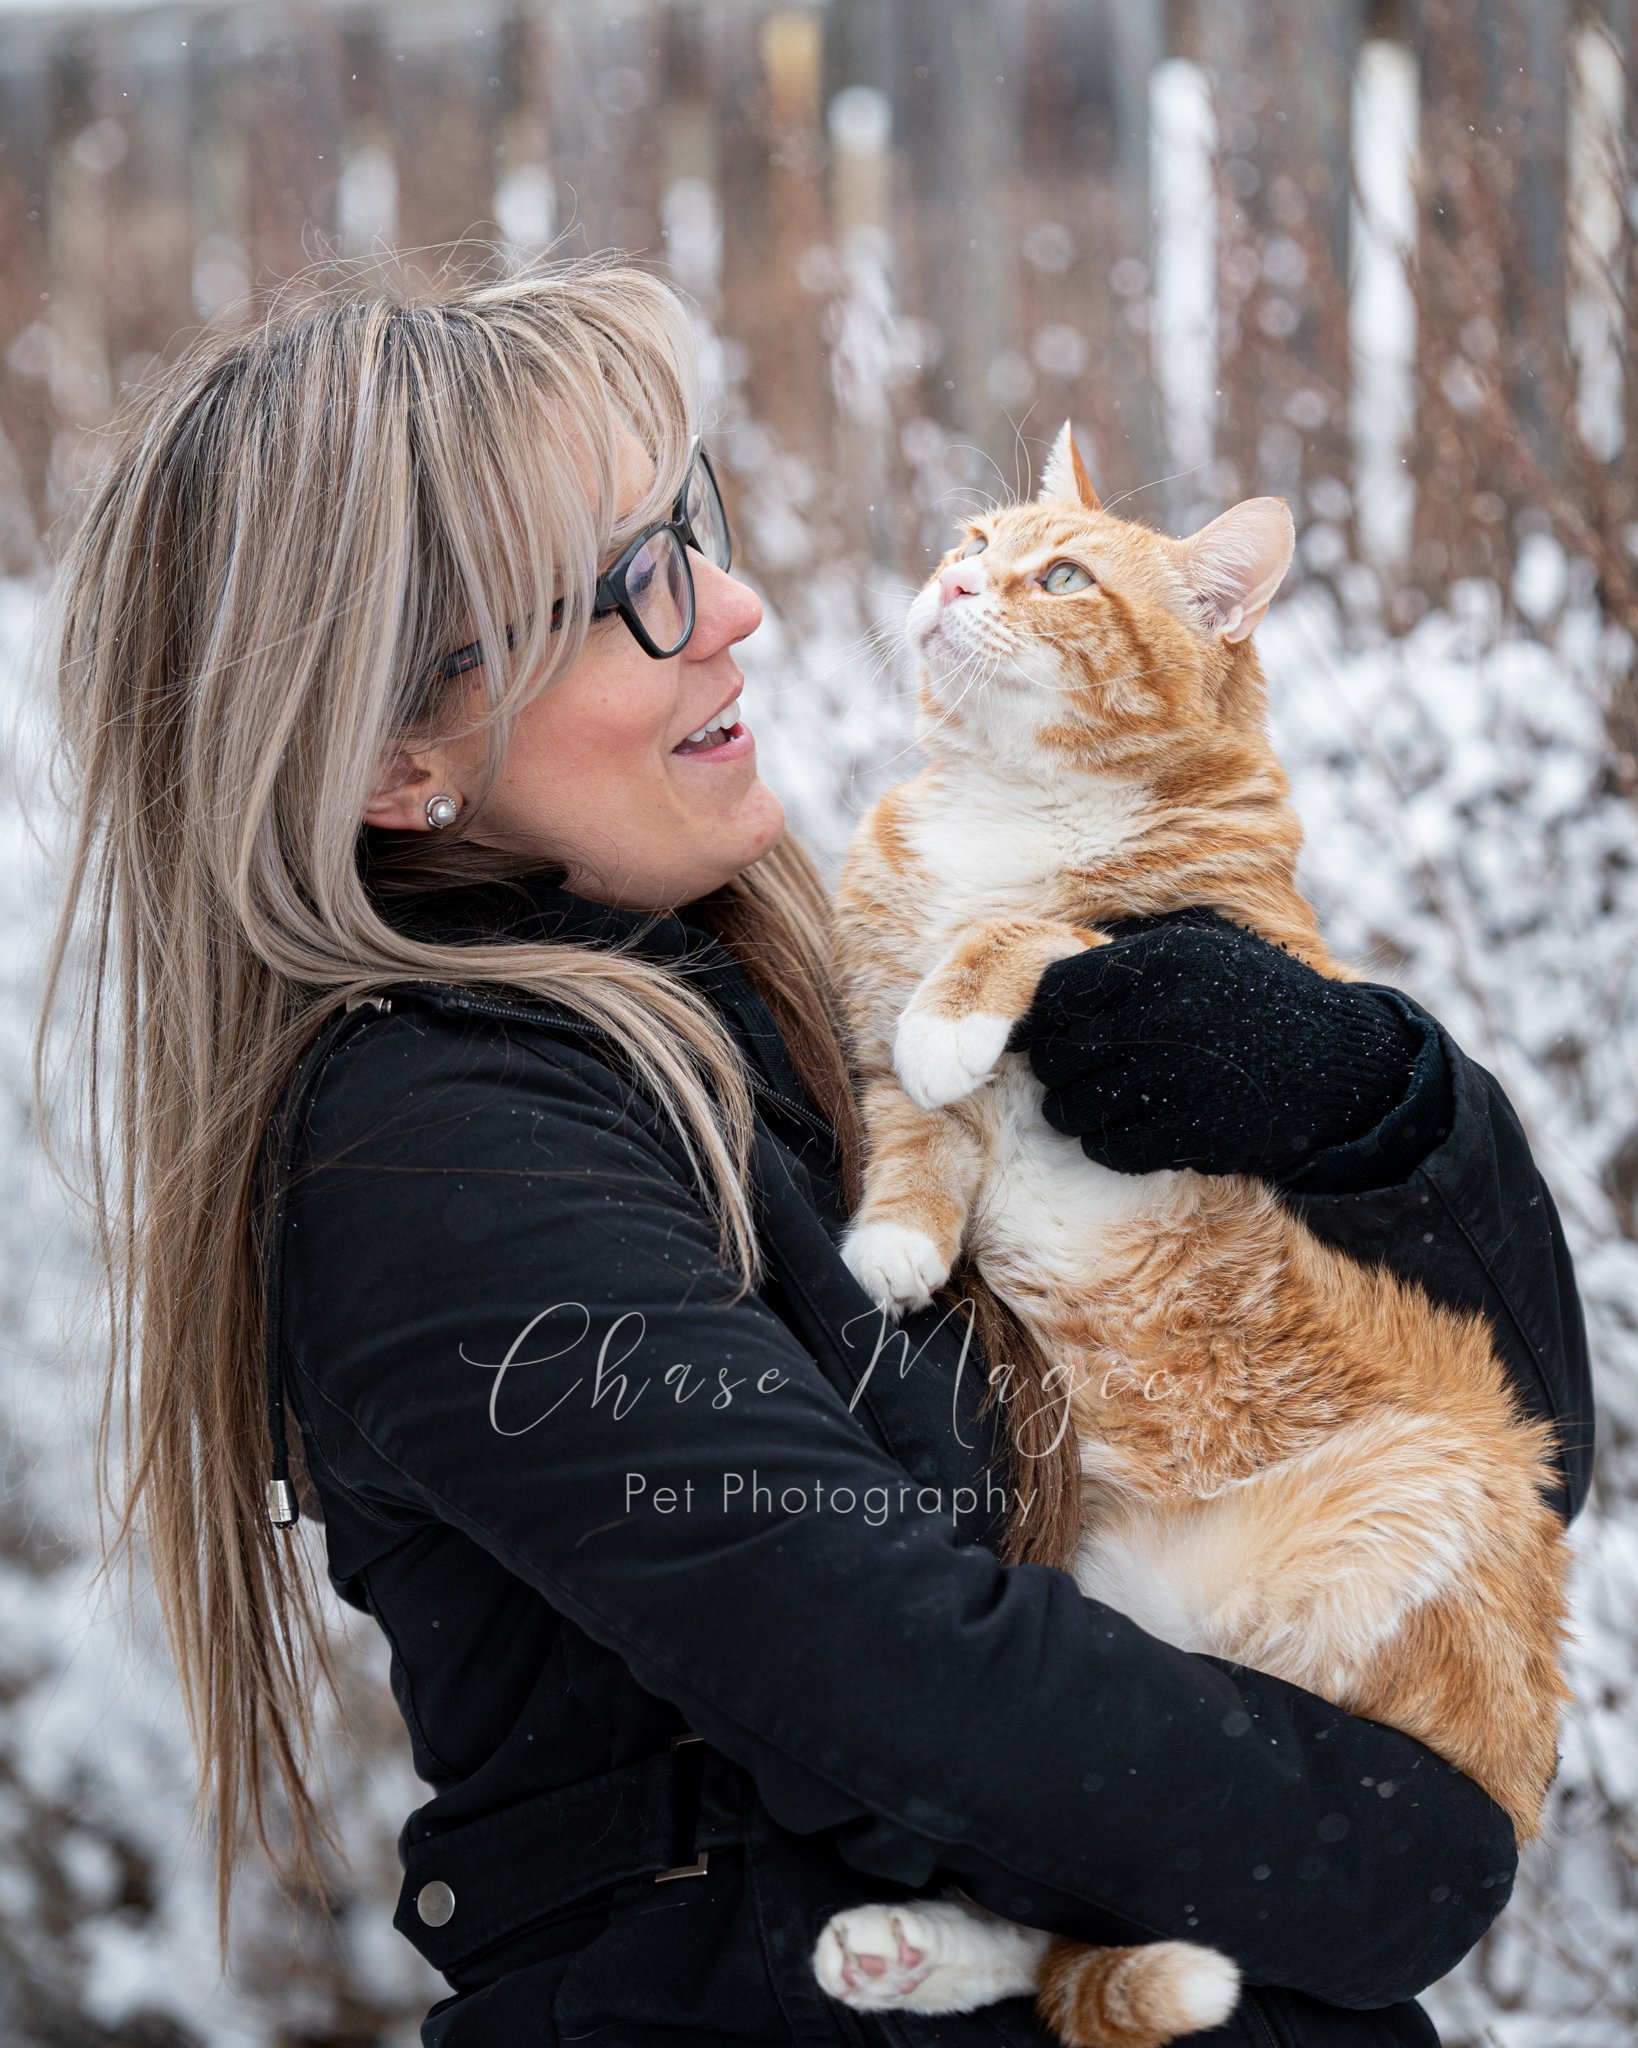 Orange cat and a women enjoying the winter snow